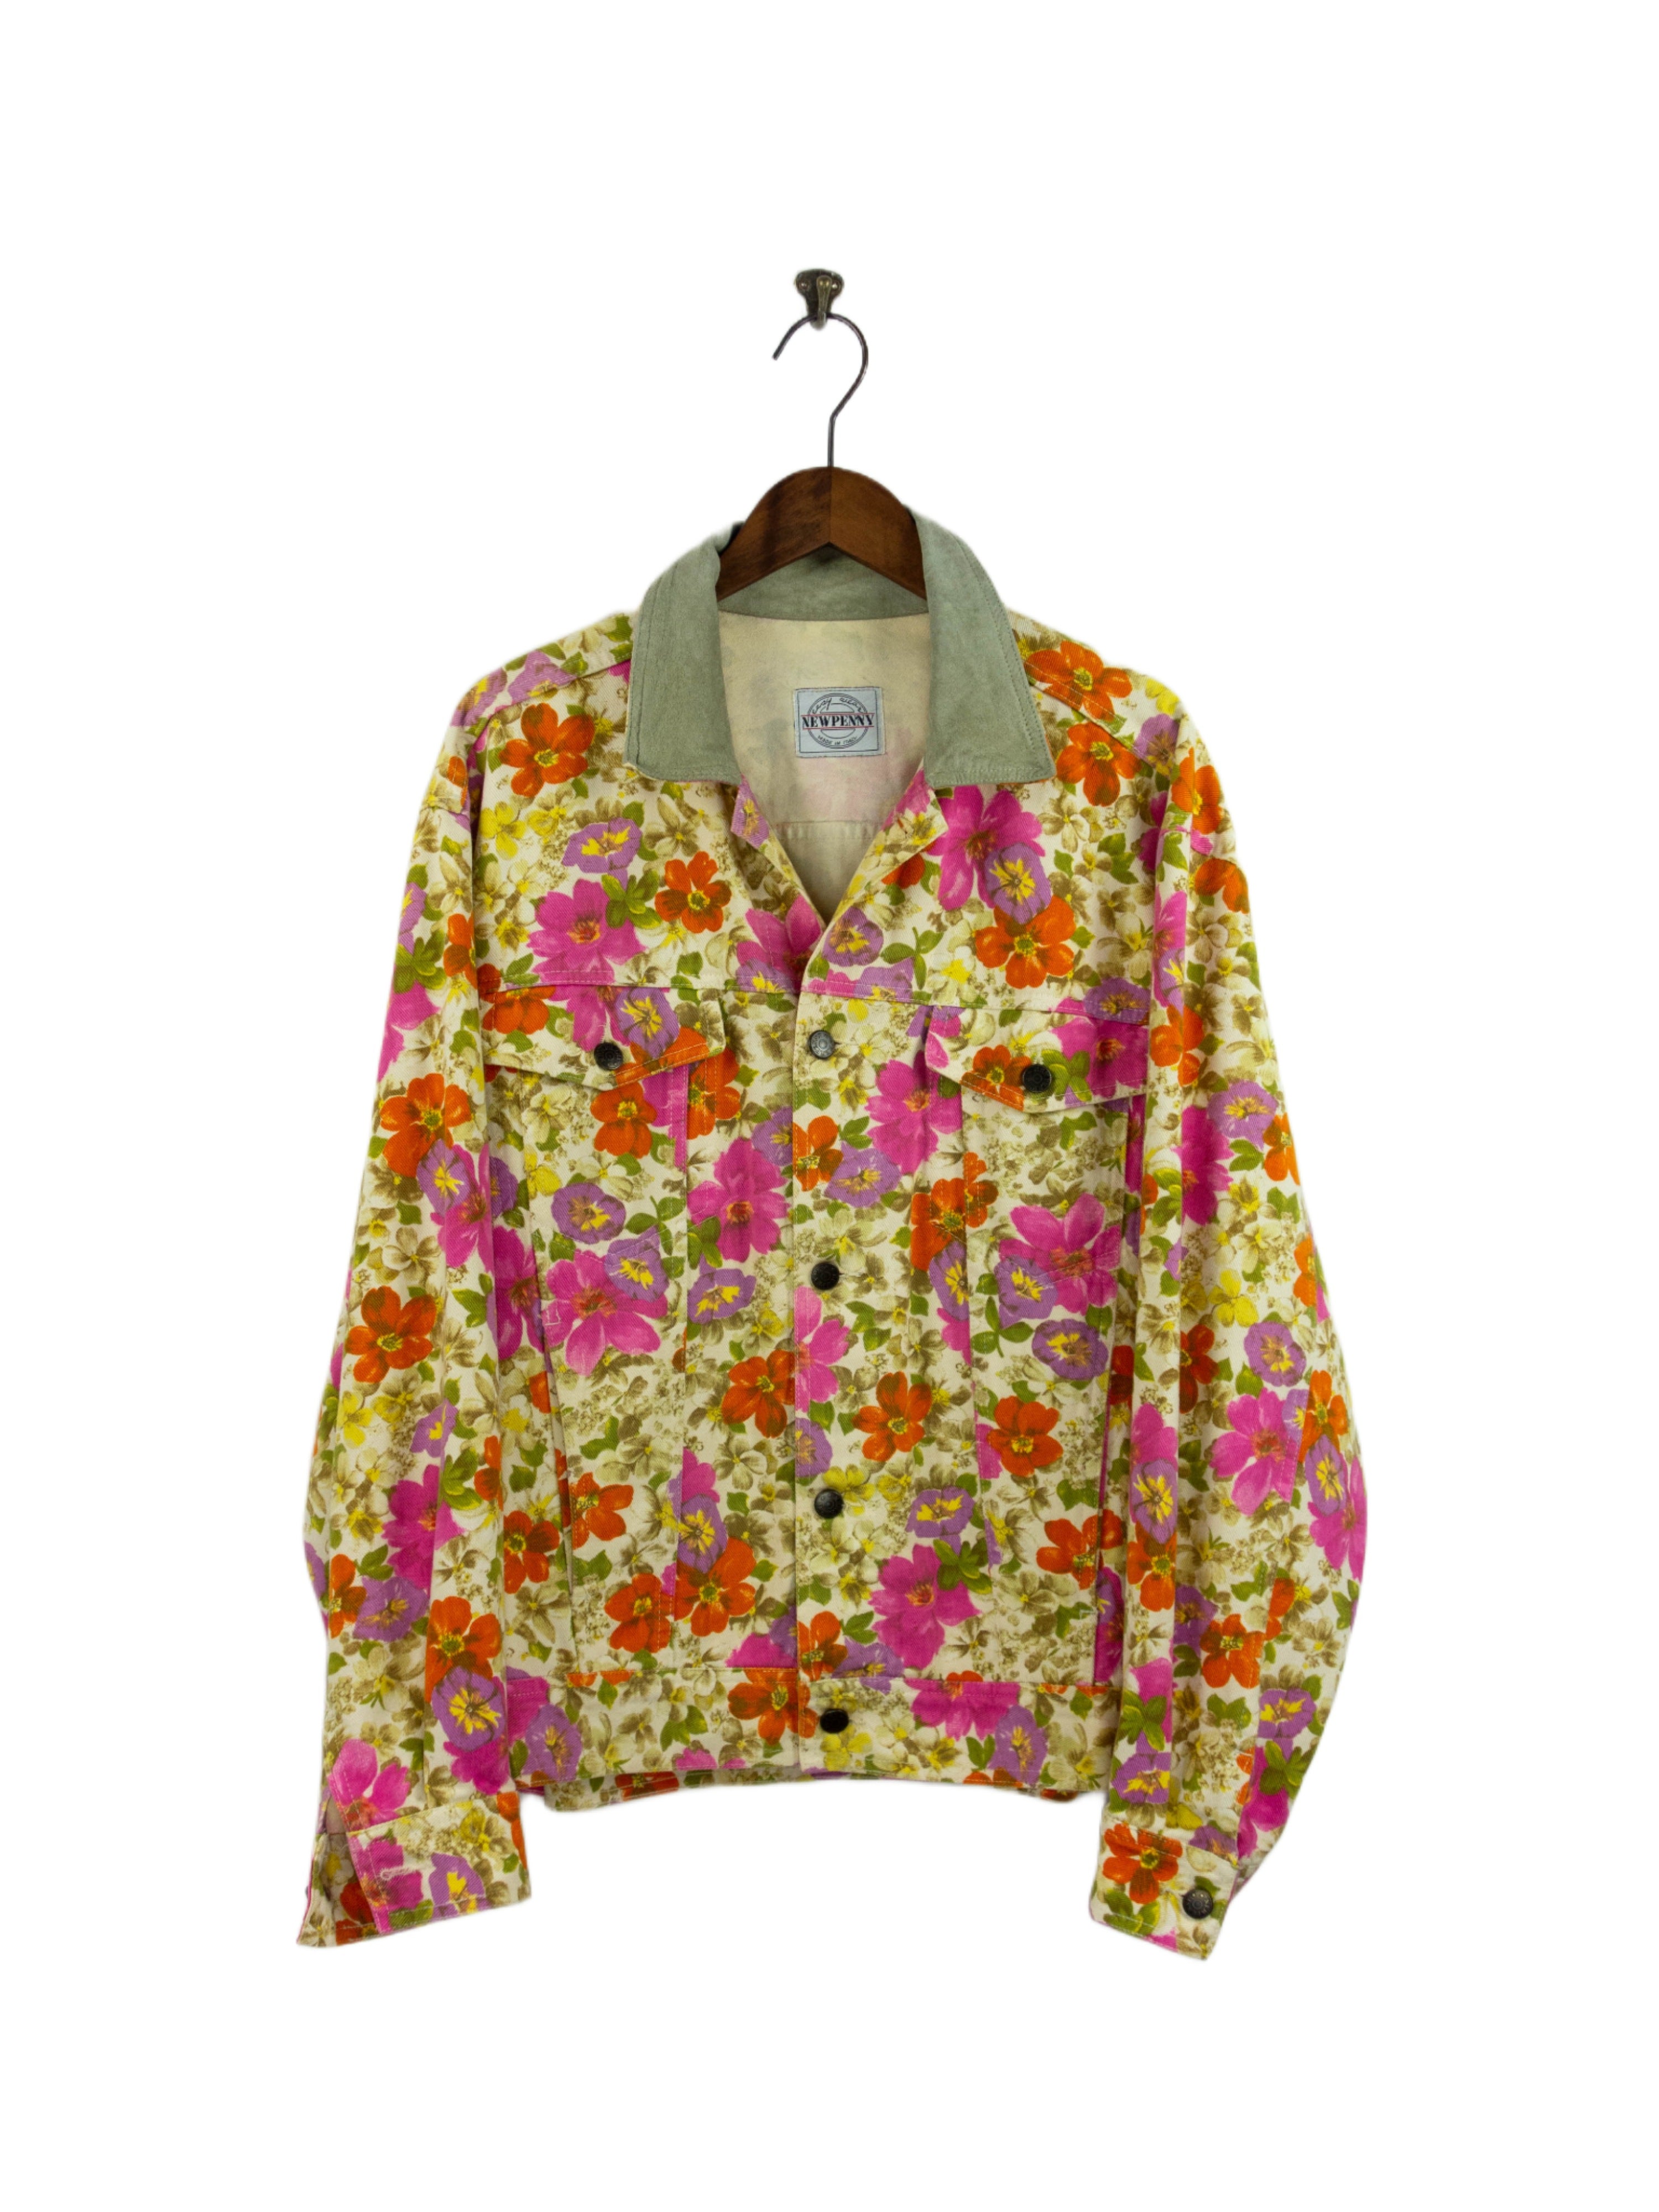 Denim jacket with a floral pattern L/XL